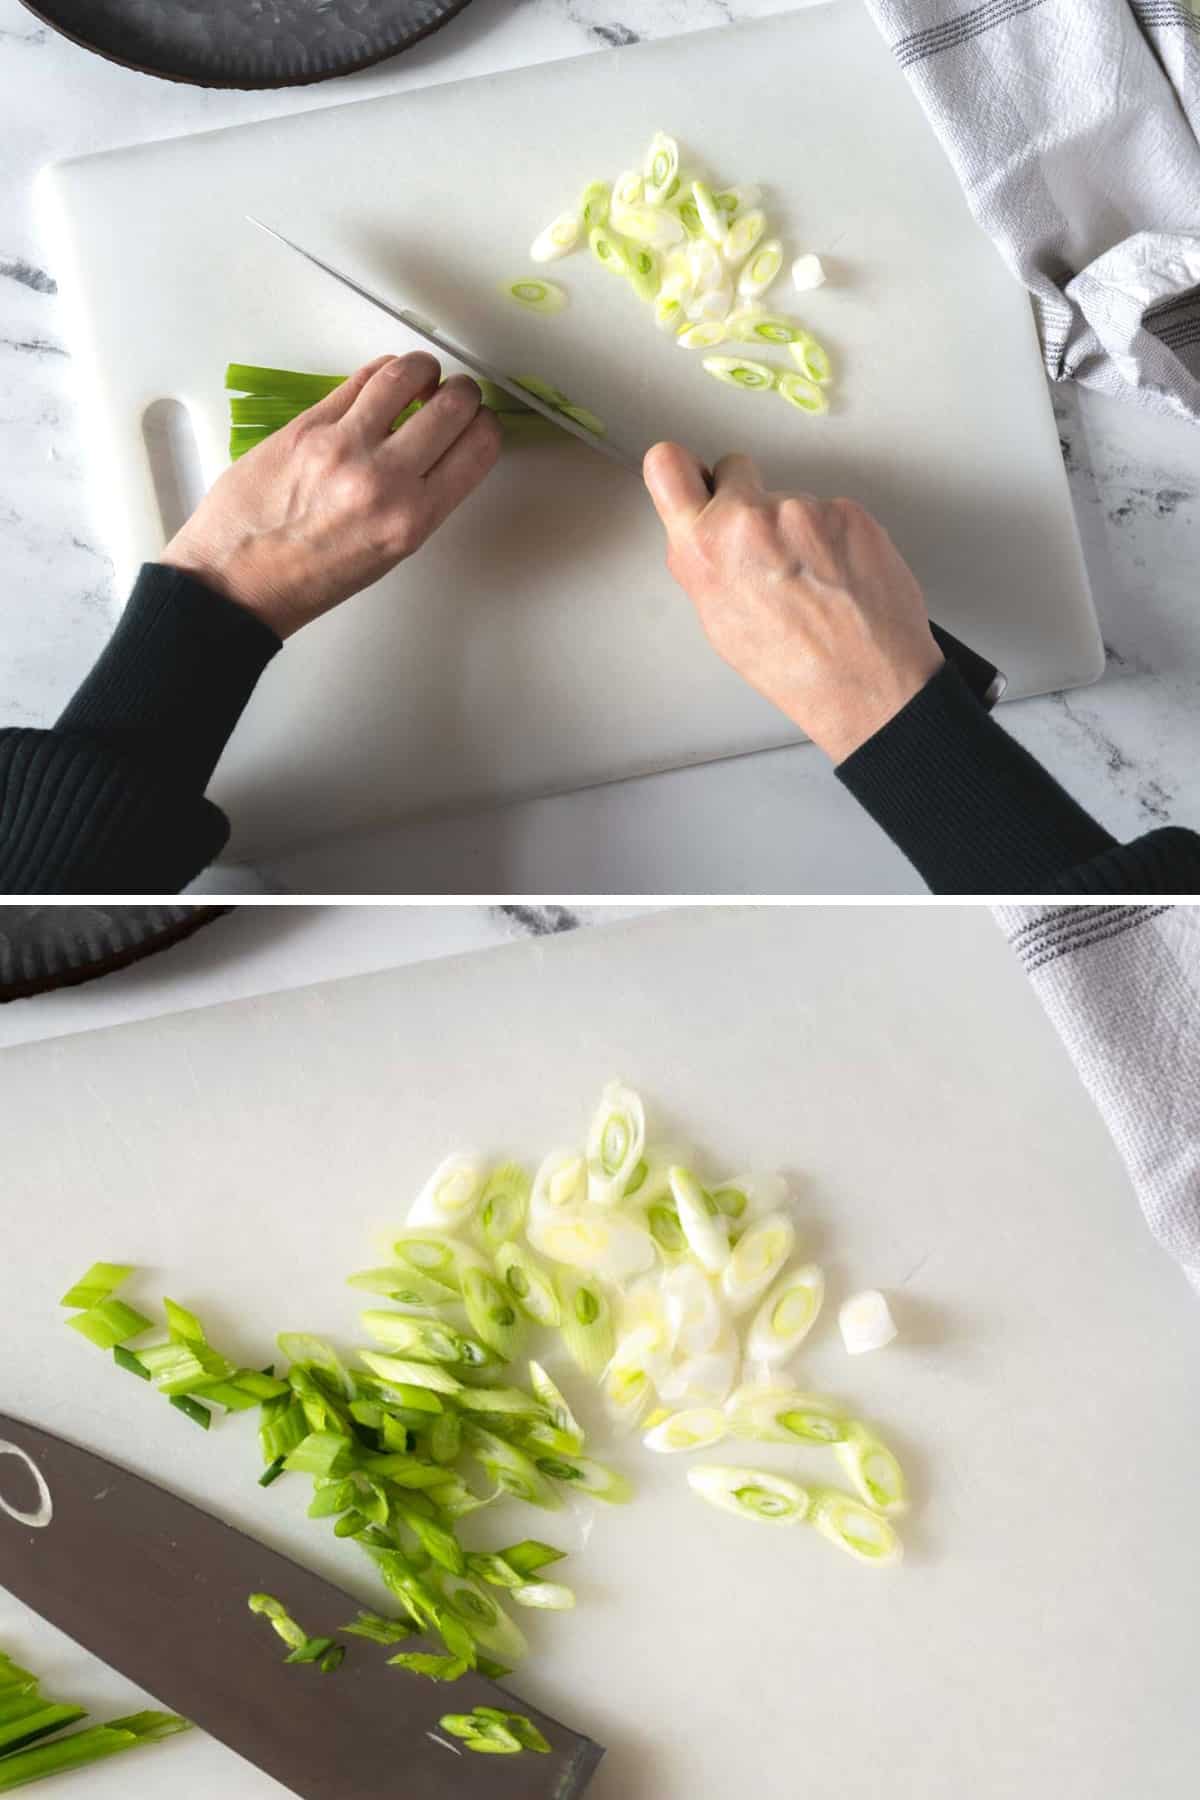 A person slicing a green onion at a diagnol.